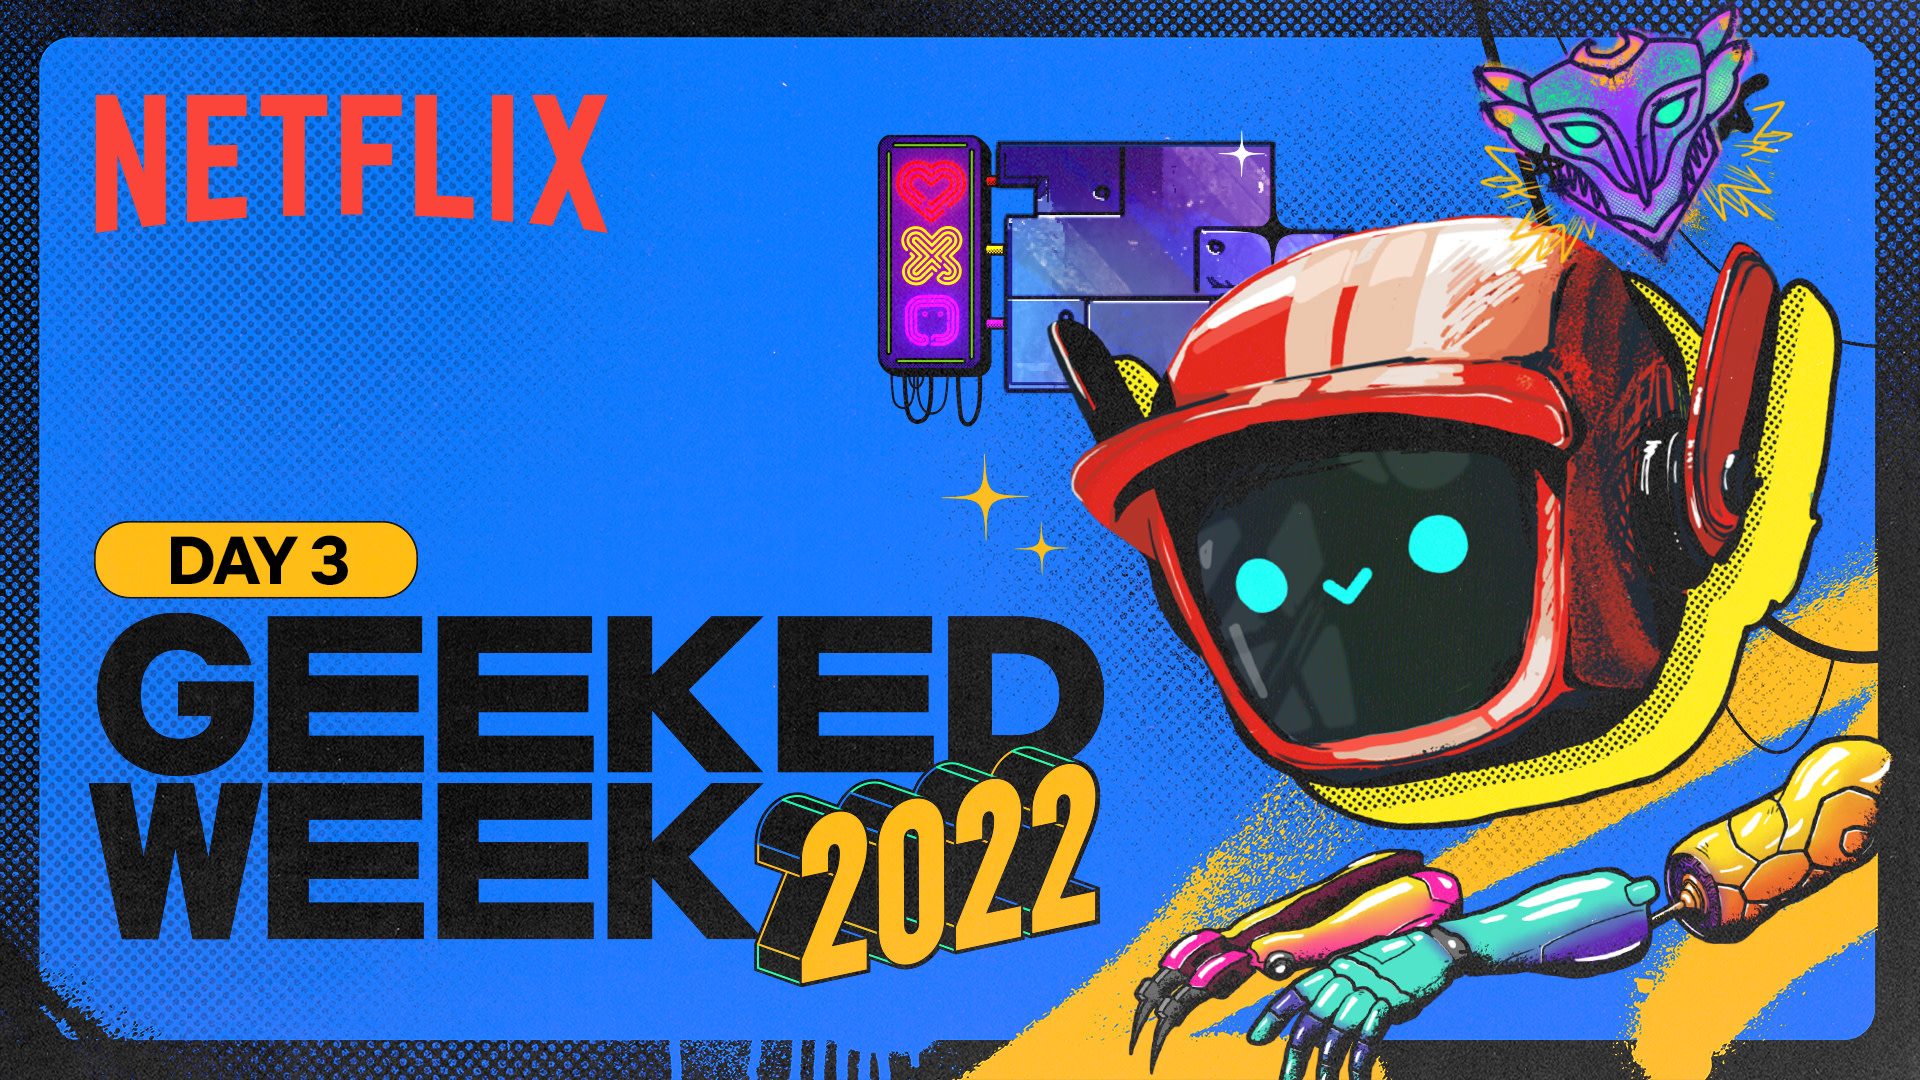 Geeked Week 2022ダイジェスト: アニメ・デーからのニュースと特別映像